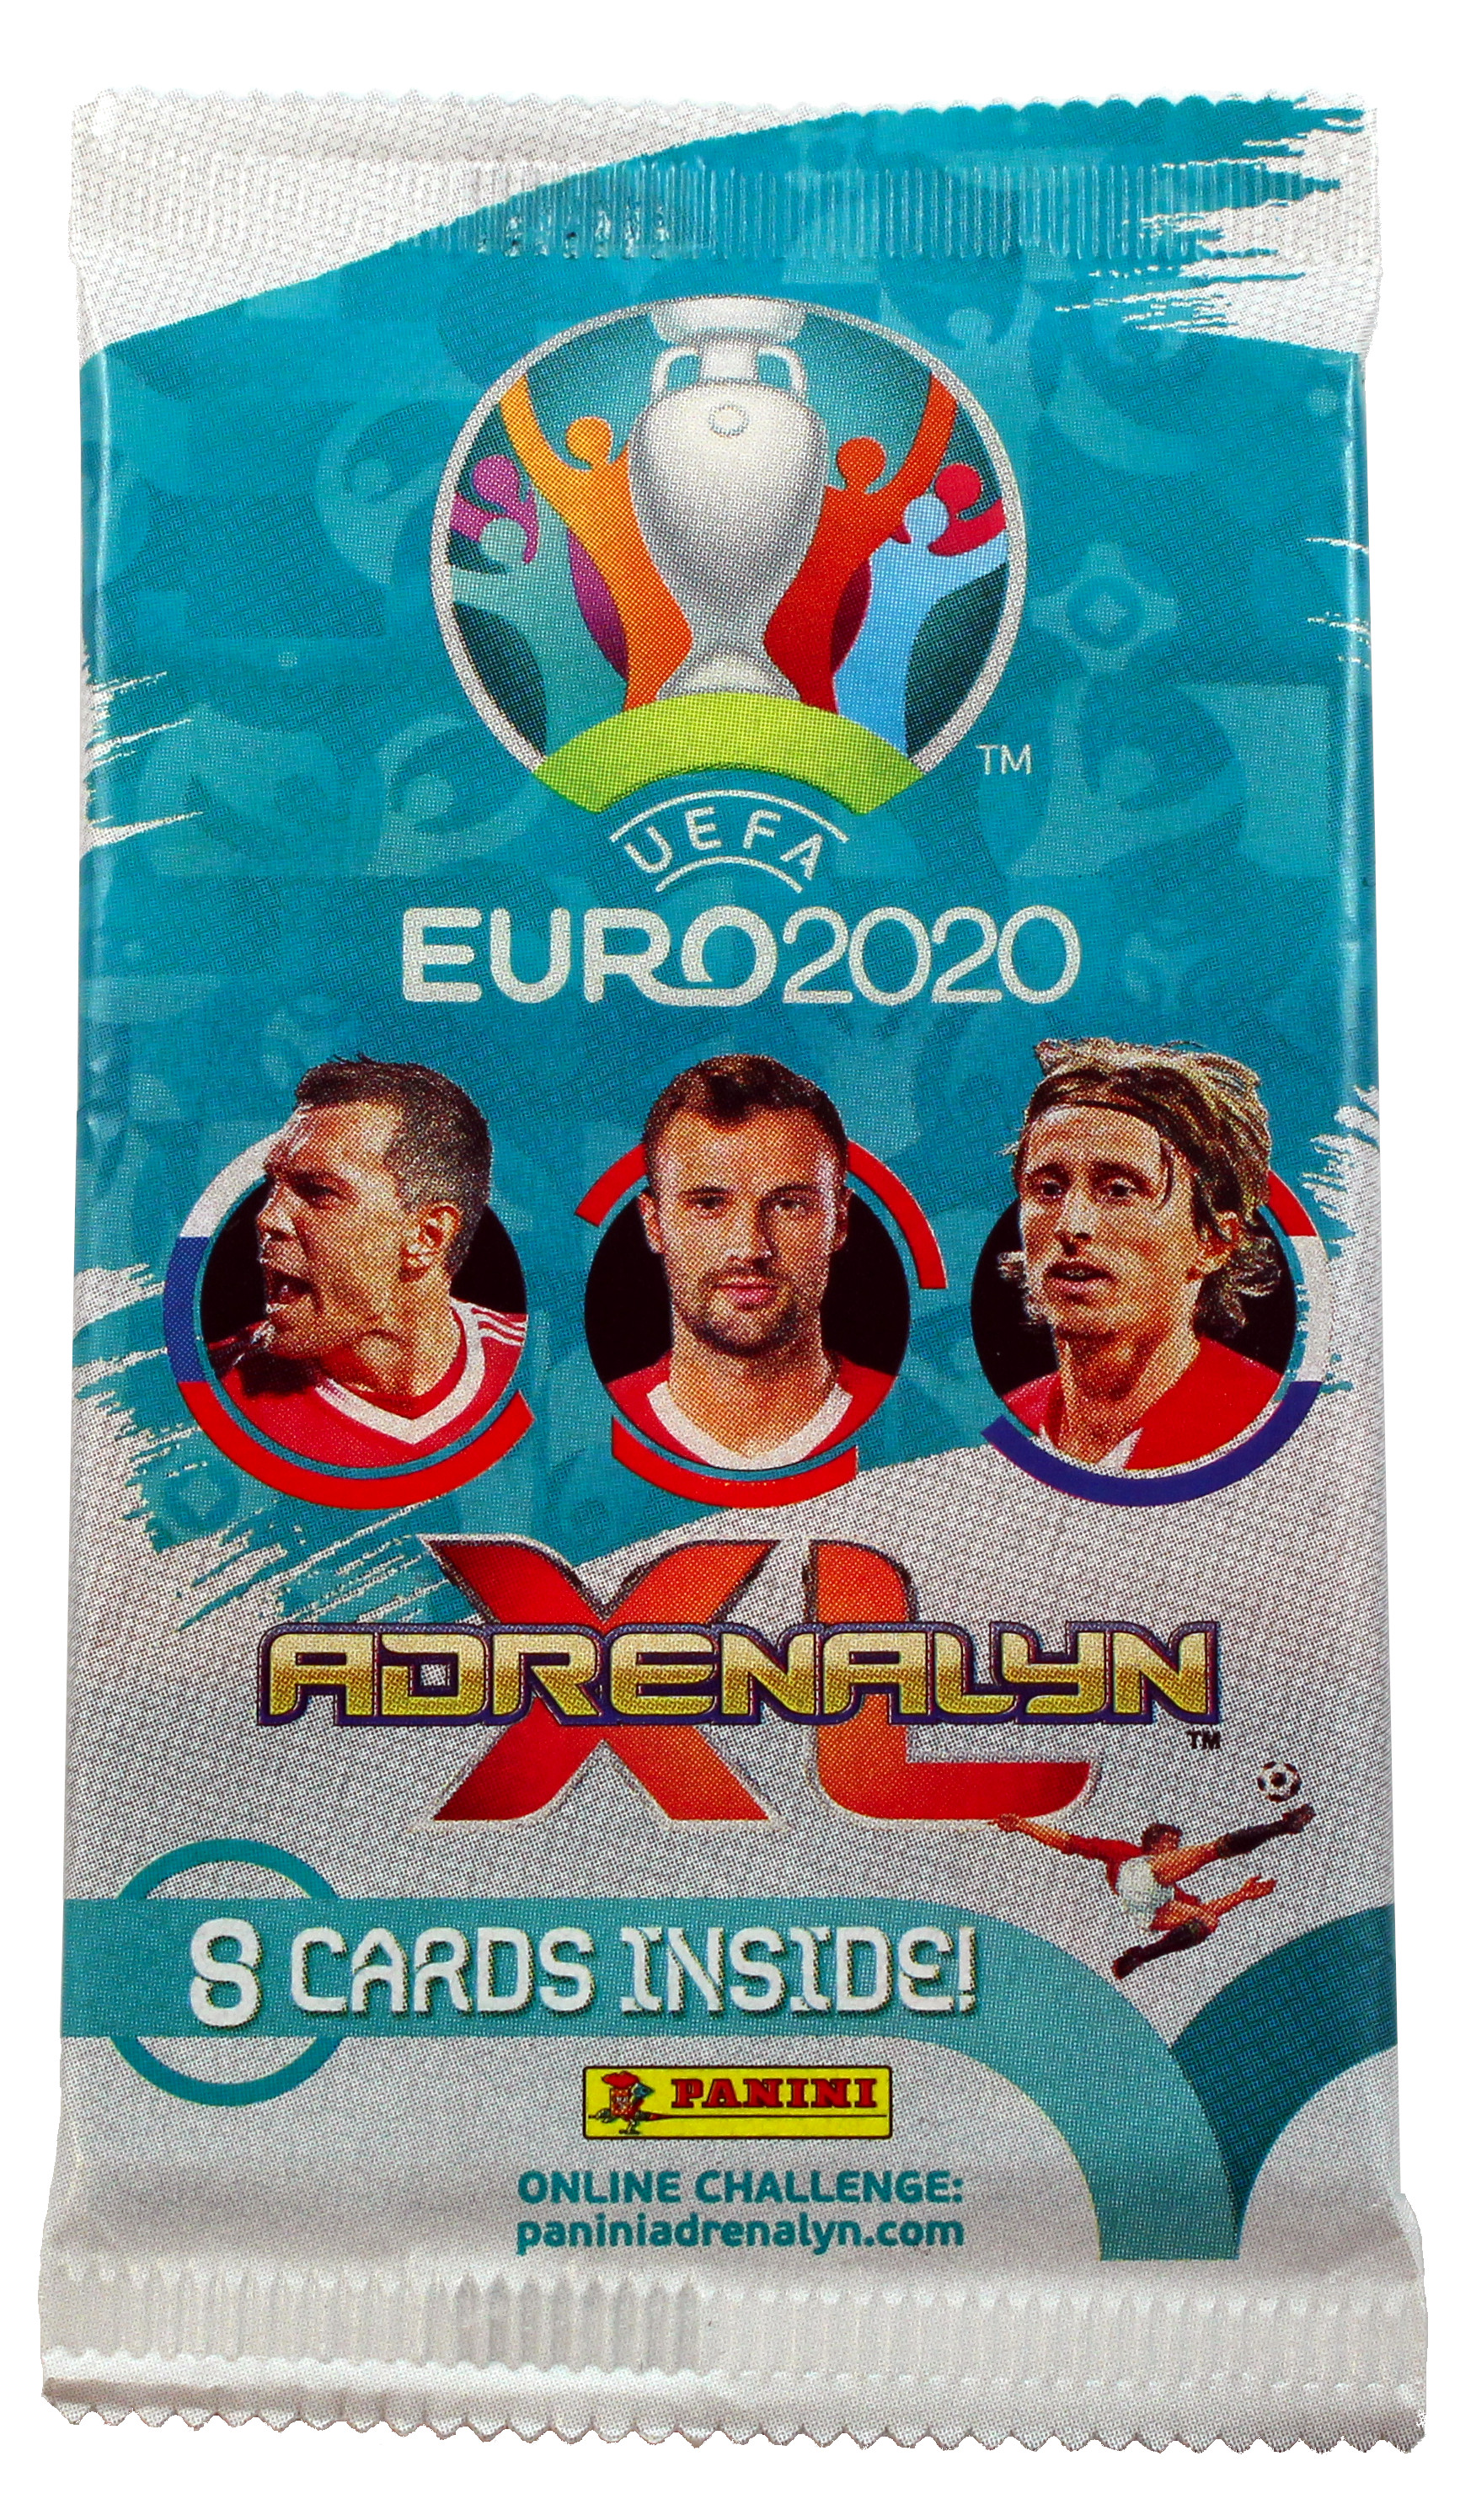 Blaster Box XL 2020 Adrenalyn UEFA - Euro